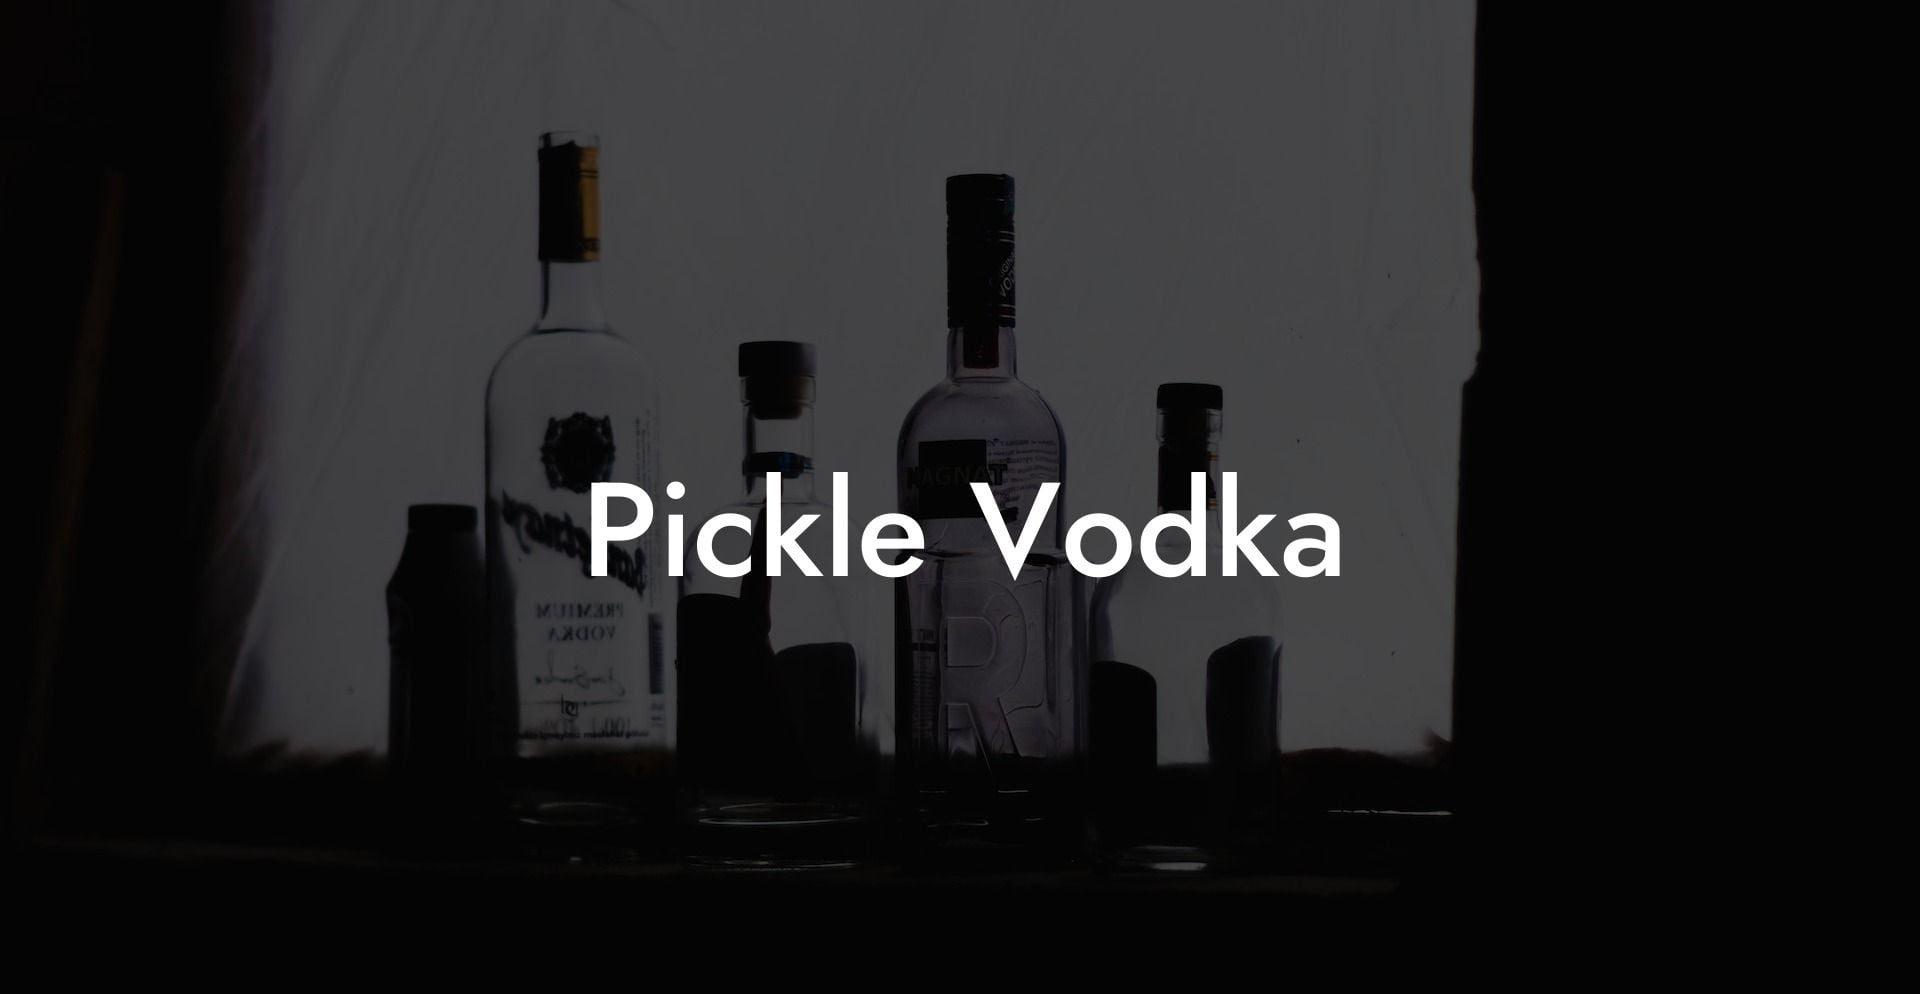 Pickle Vodka